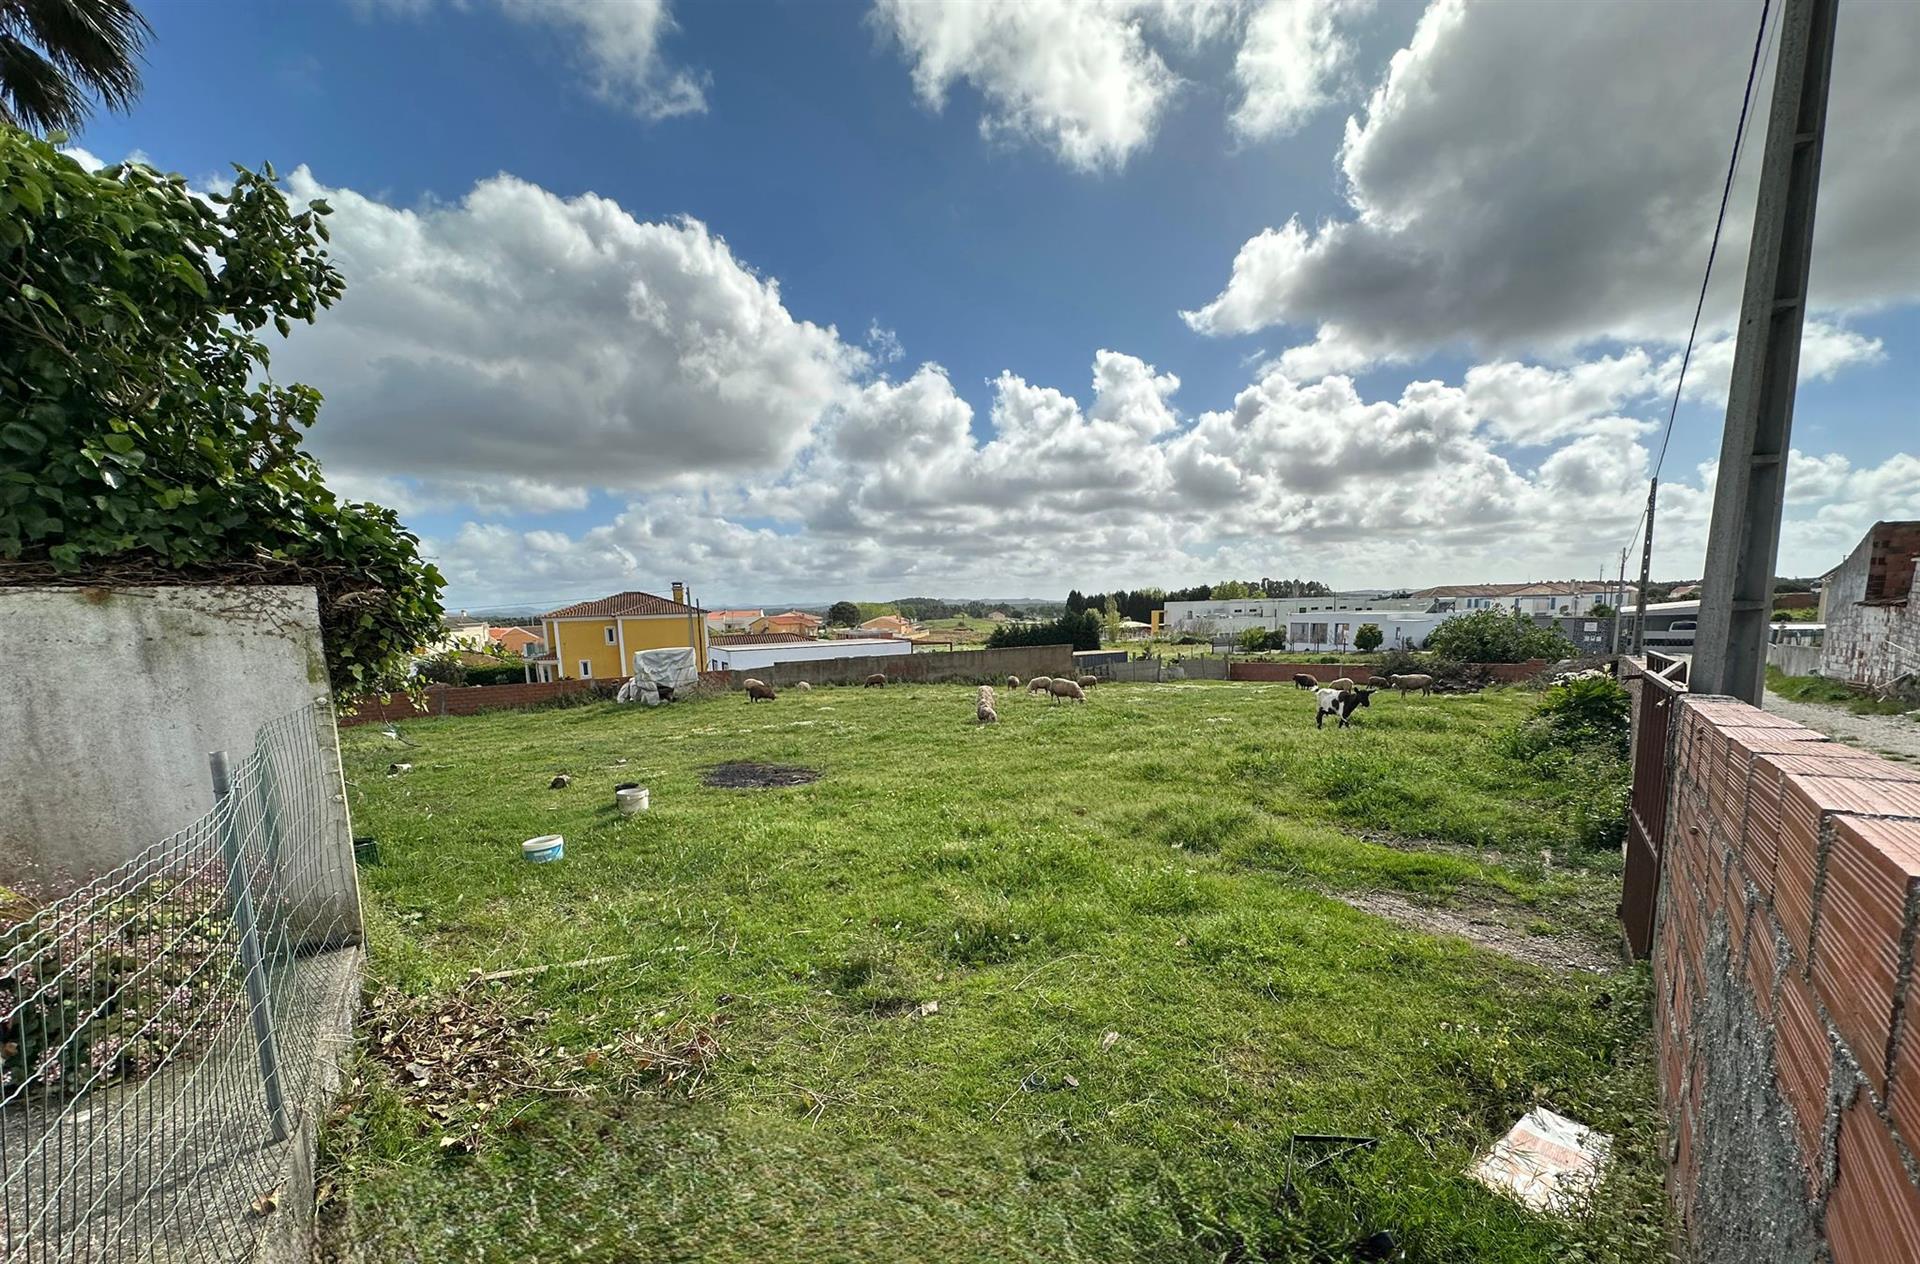 Plot of land to build a villa, village center, near Torres Vedras